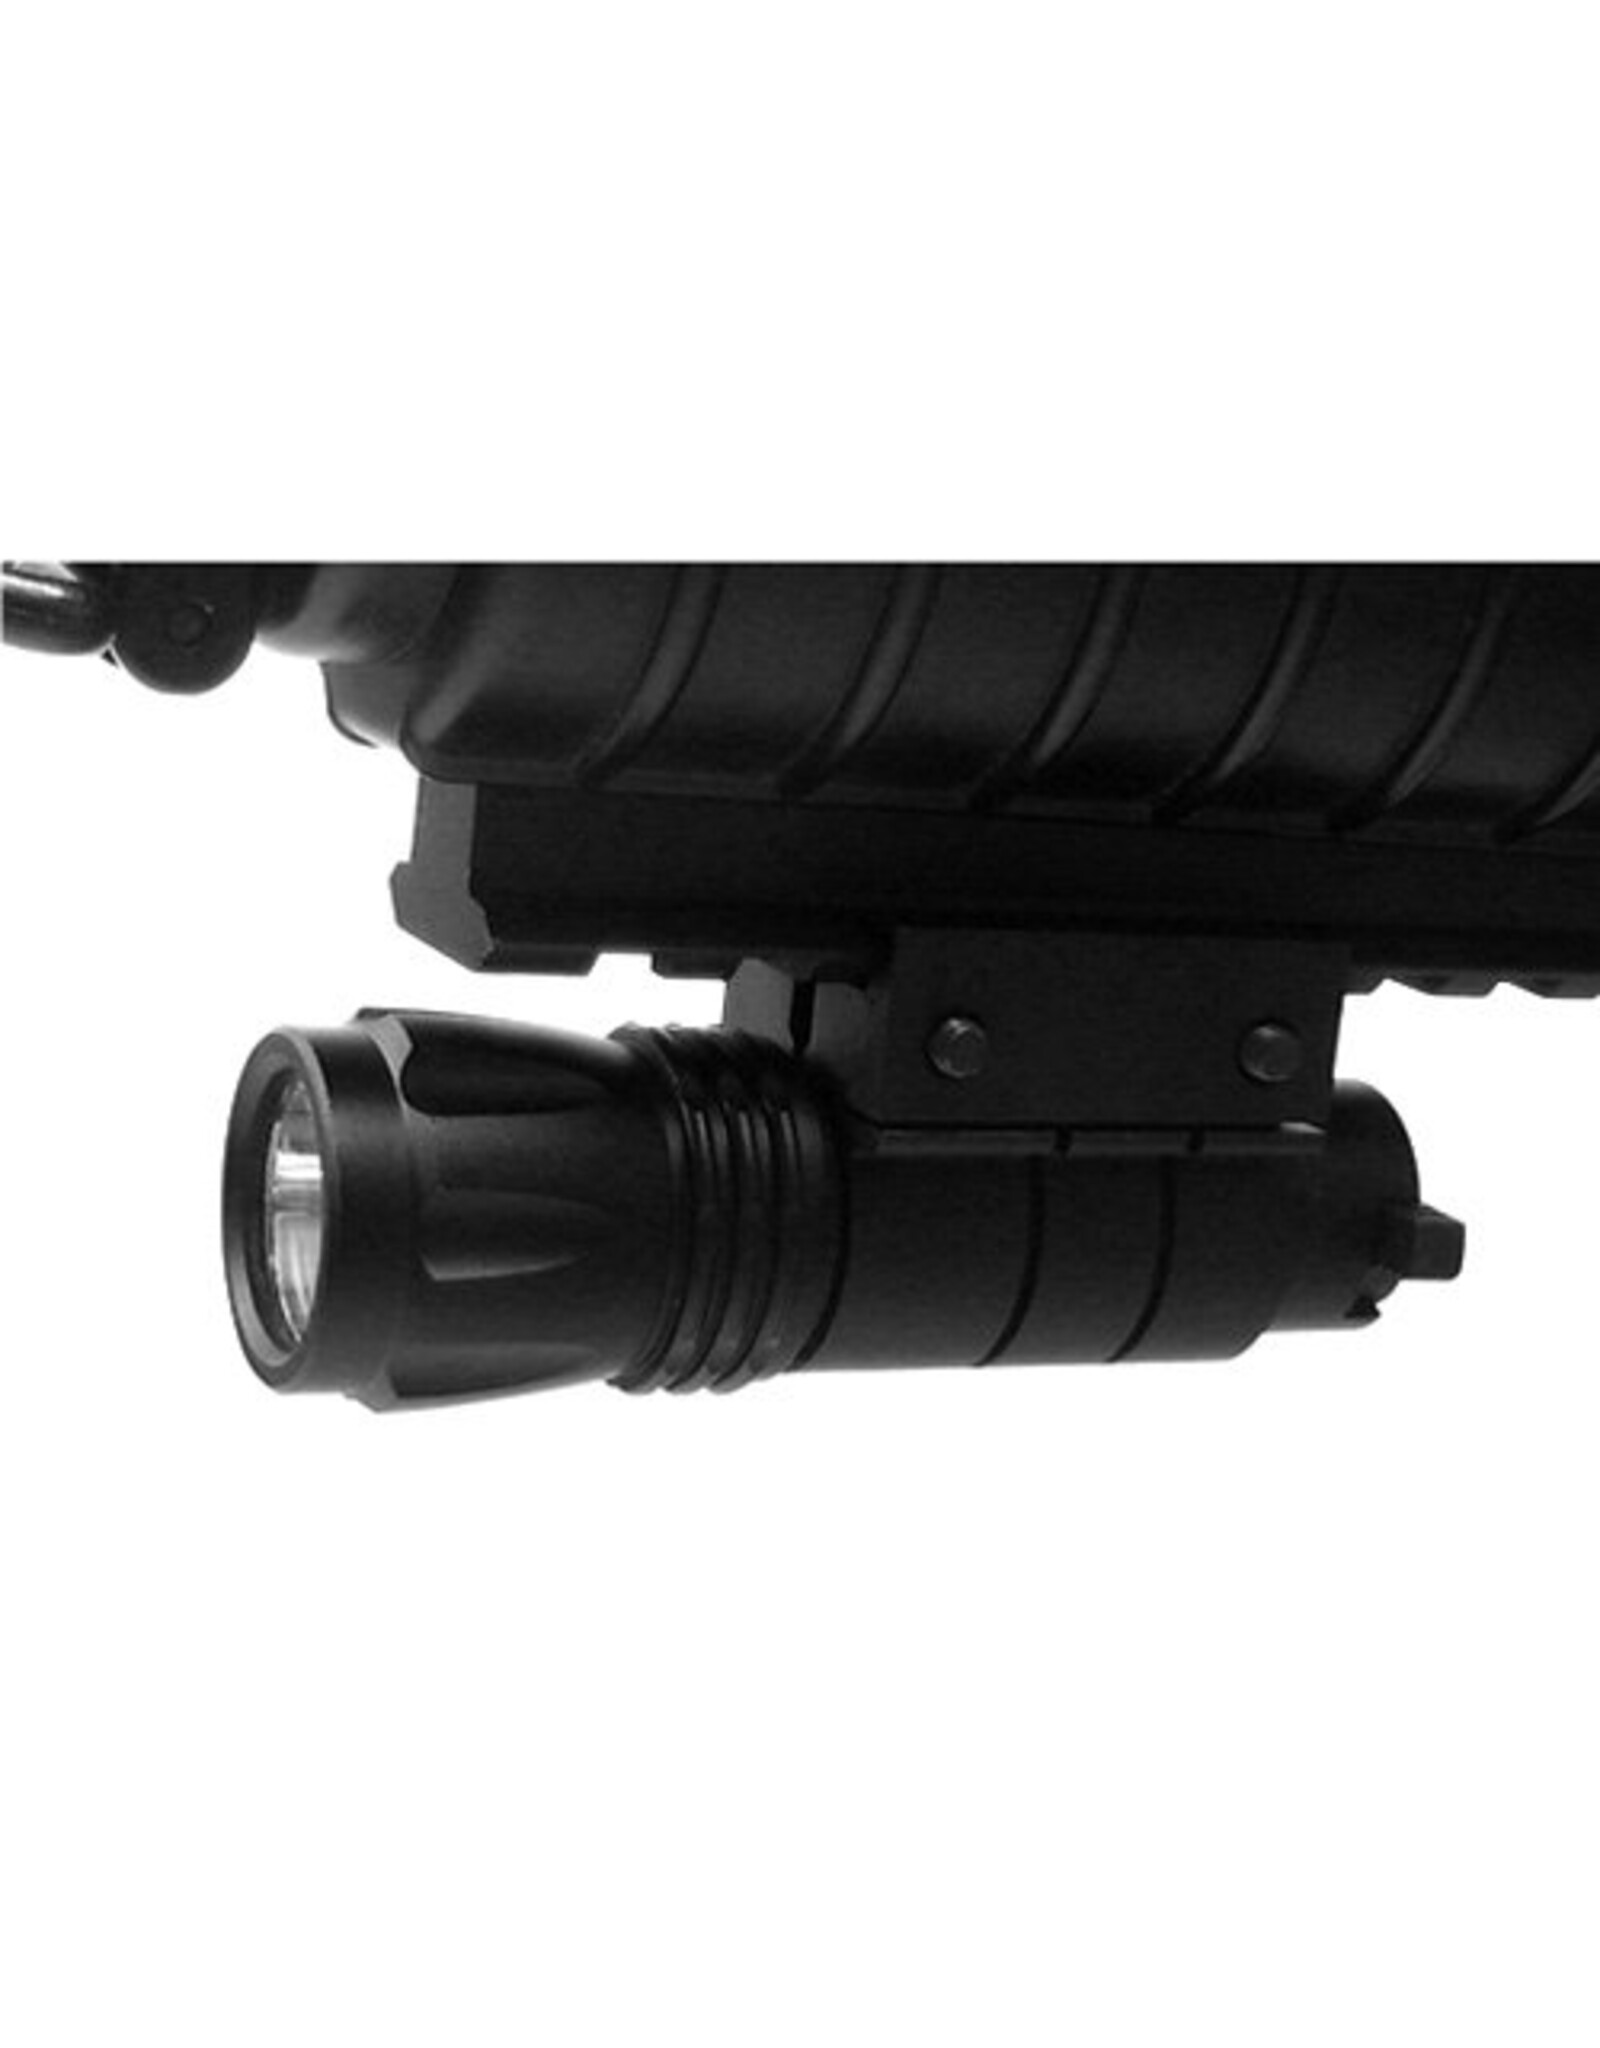 NcStar Pistol & Rifle LED flashlight/weaver mount